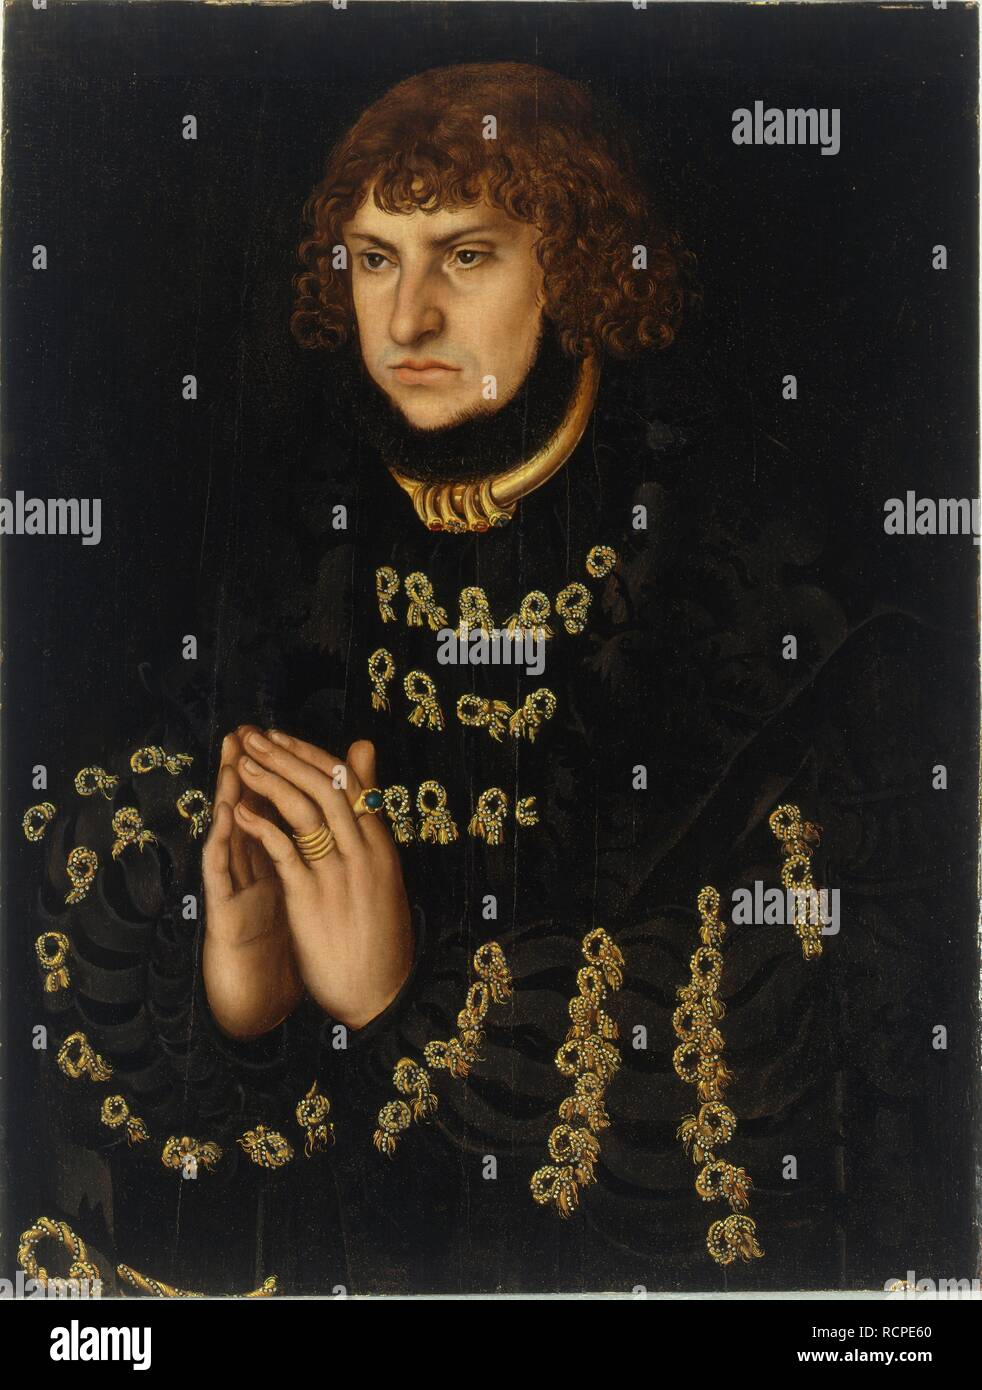 Johann the Steadfast (1468-1532), Elector of Saxony. Museum: Veste Coburg. Author: Cranach, Lucas, the Elder. Stock Photo